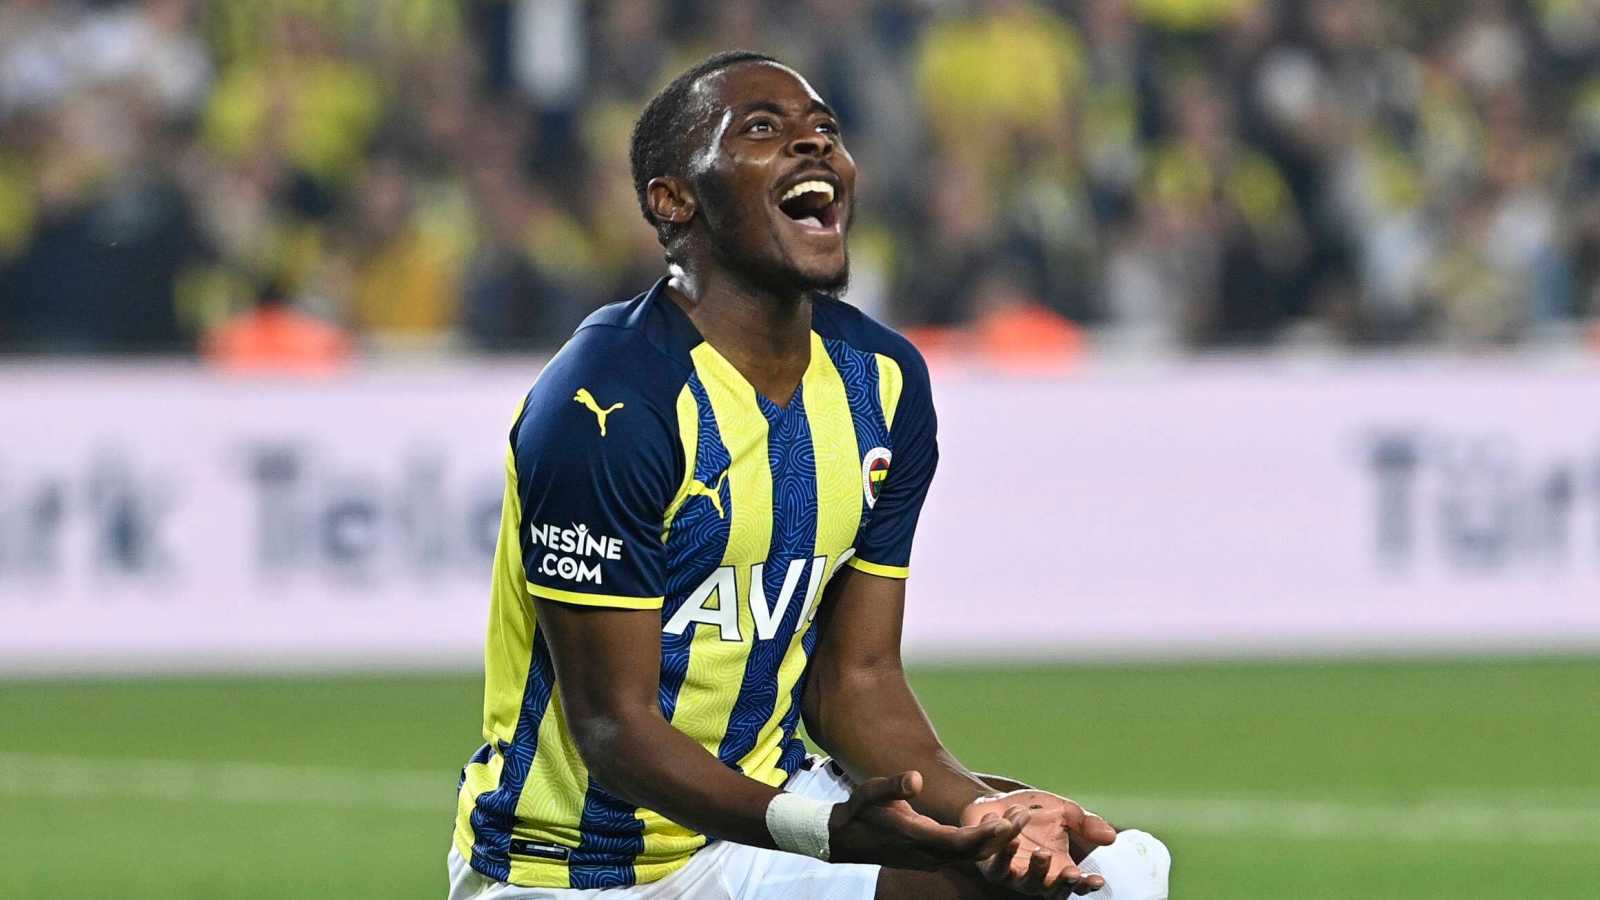 Nigerian star Osayi-Samuel picks up damage amid sizzling title race in Turkey